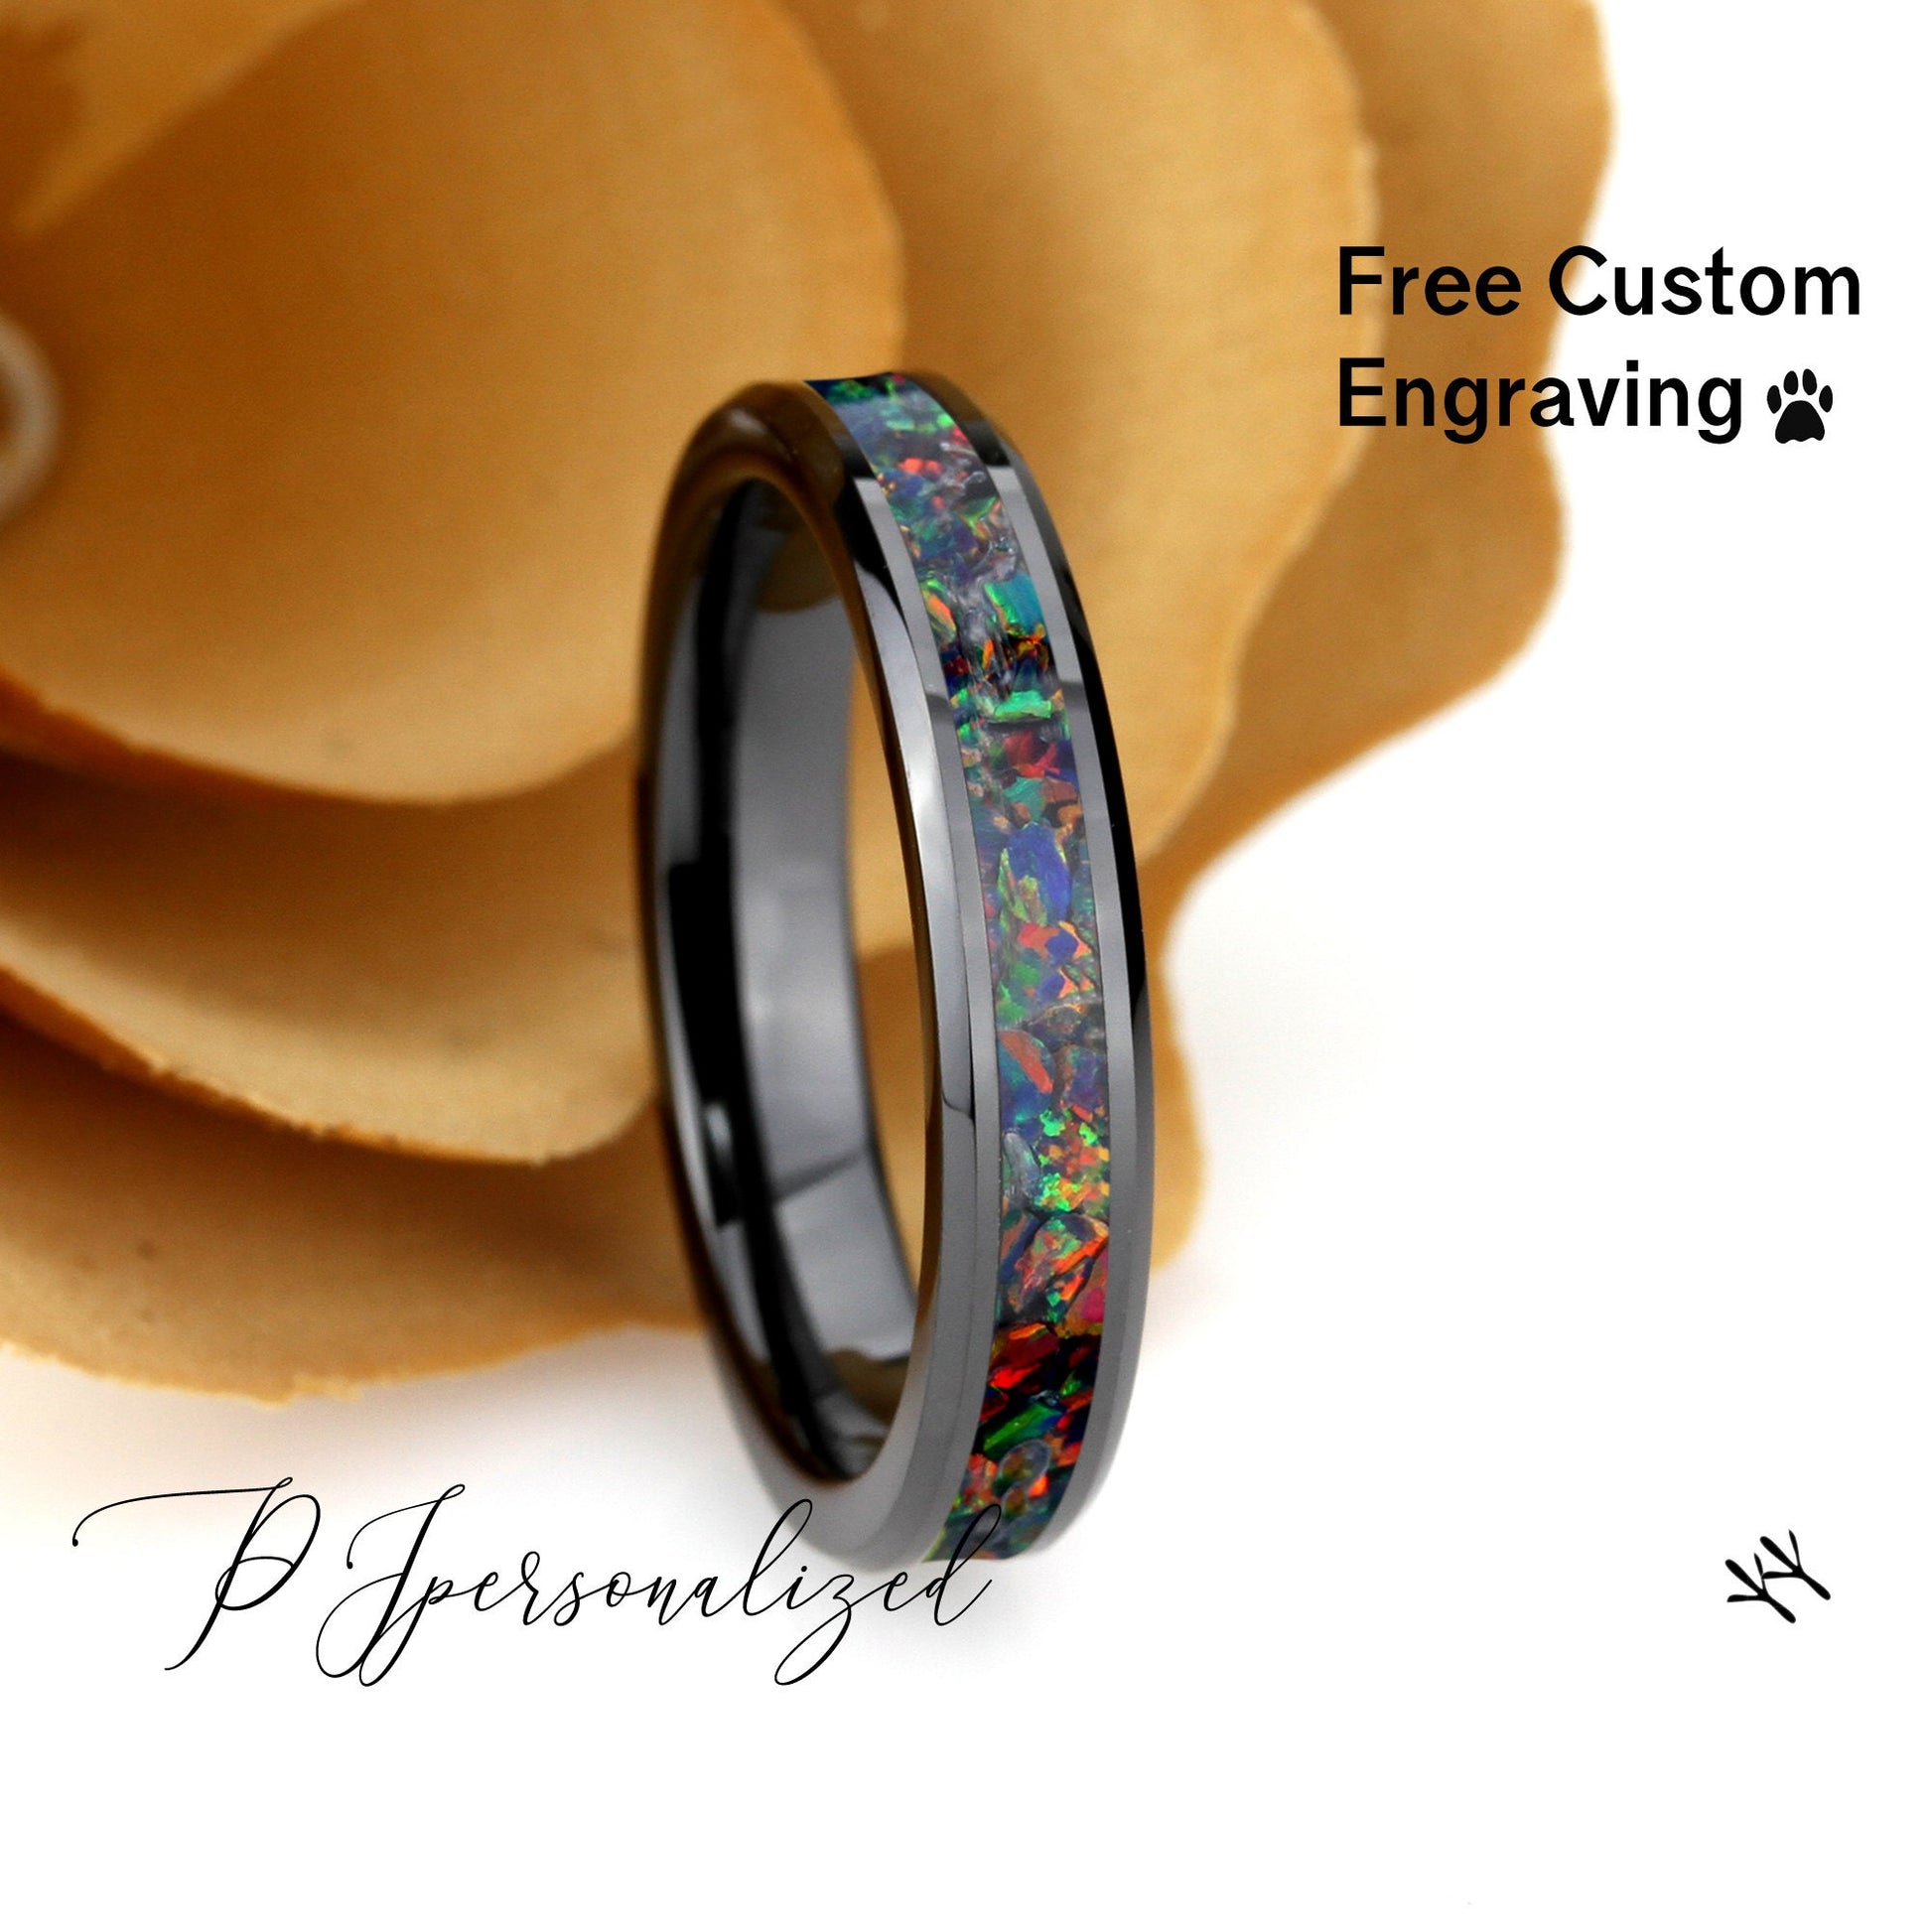 Men's Iridescent Rainbow & Black Tungsten Carbide Ring - Ideal Place Market